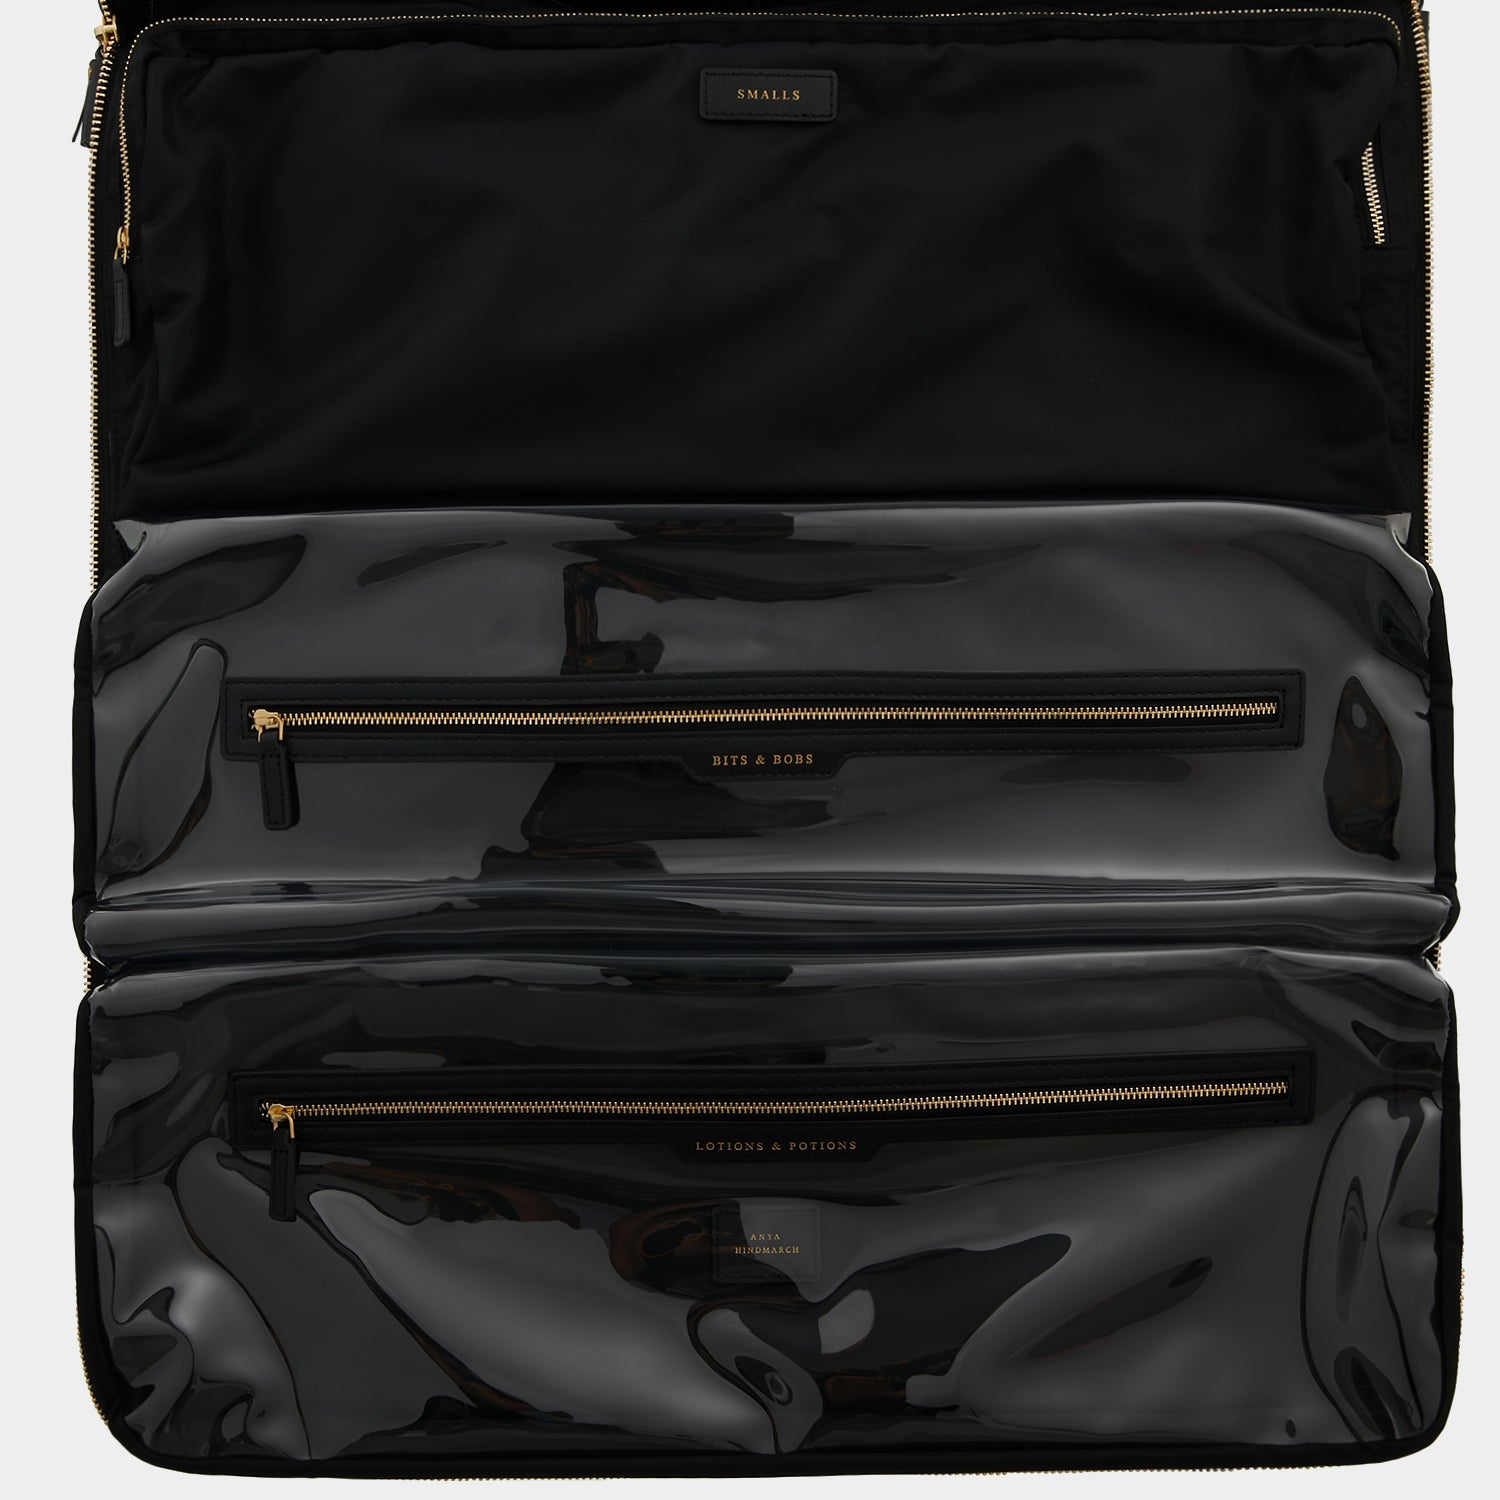 Mobile Wardrobe Travel Bag -

                  
                    Nylon Wardrobe Black -
                  

                  Anya Hindmarch EU
